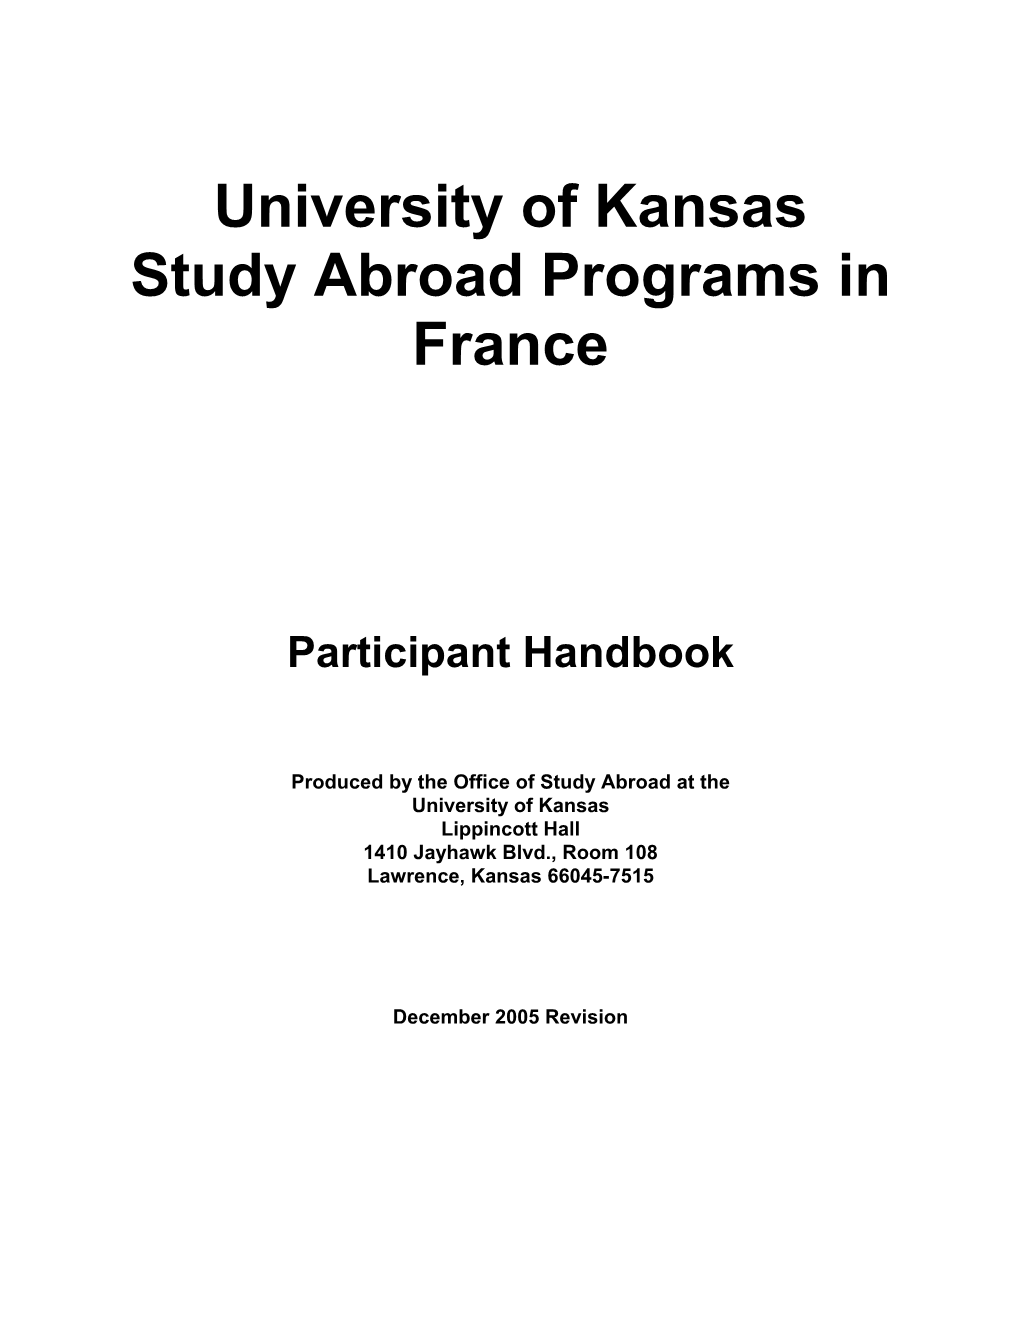 University of Kansas Study Abroad Programs in France